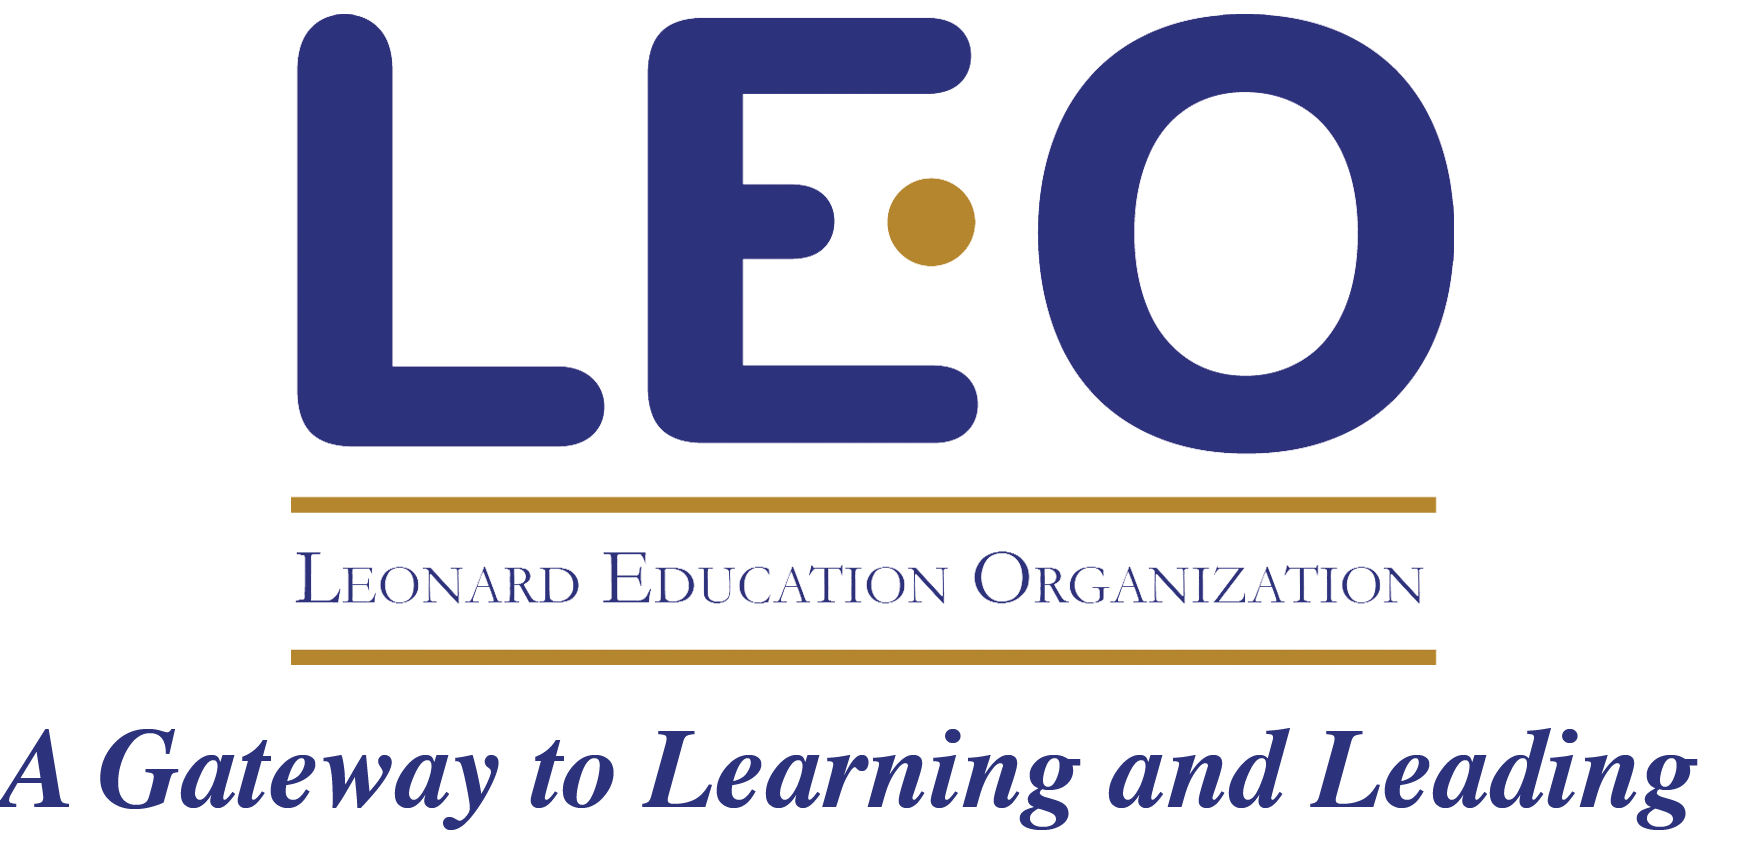 Leonard Education Organization